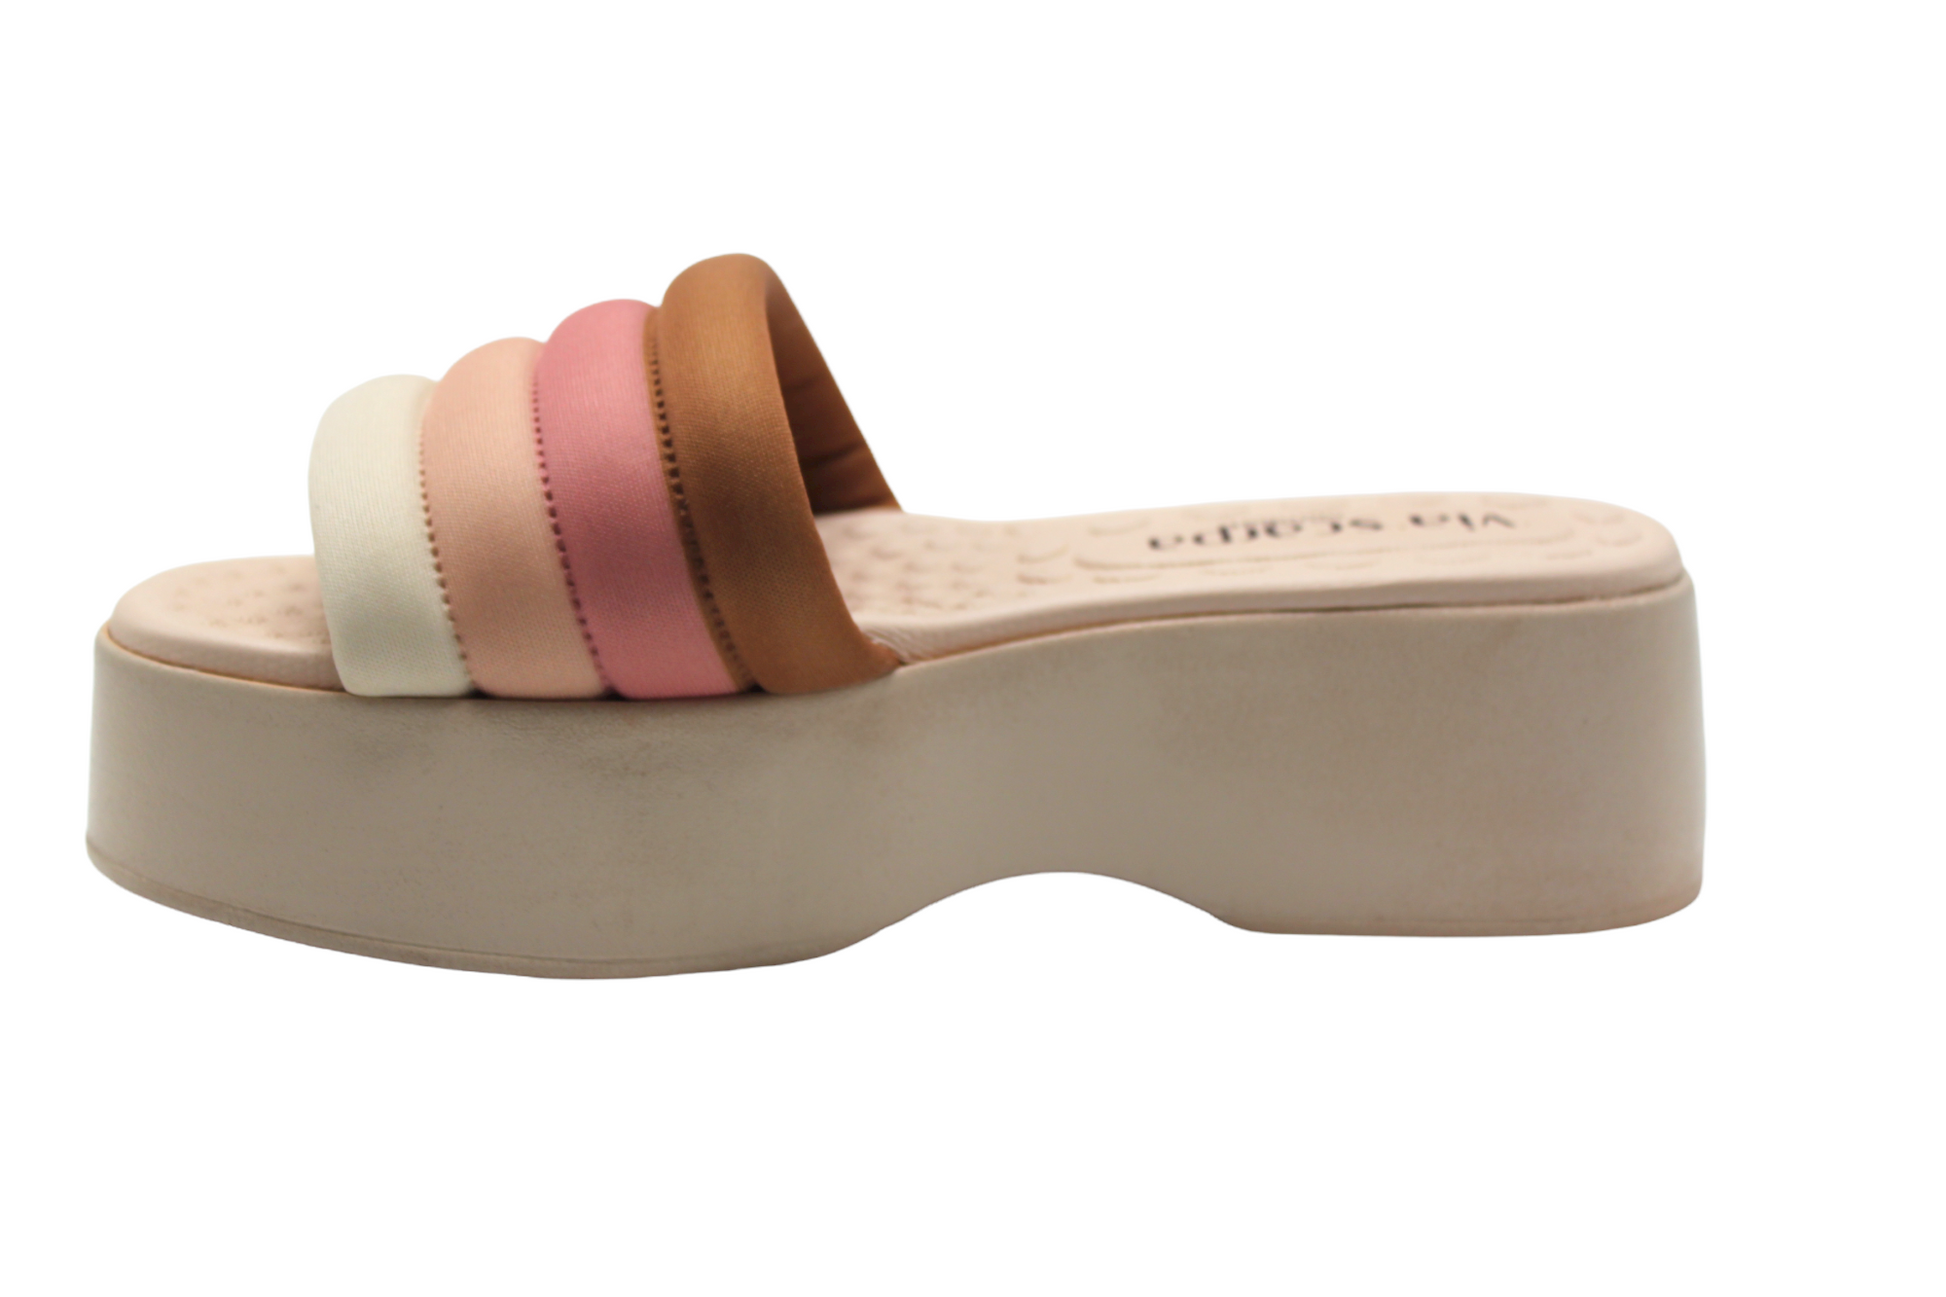 Slip On Pink/White Striped Platform Sandals - Julia & Santos 